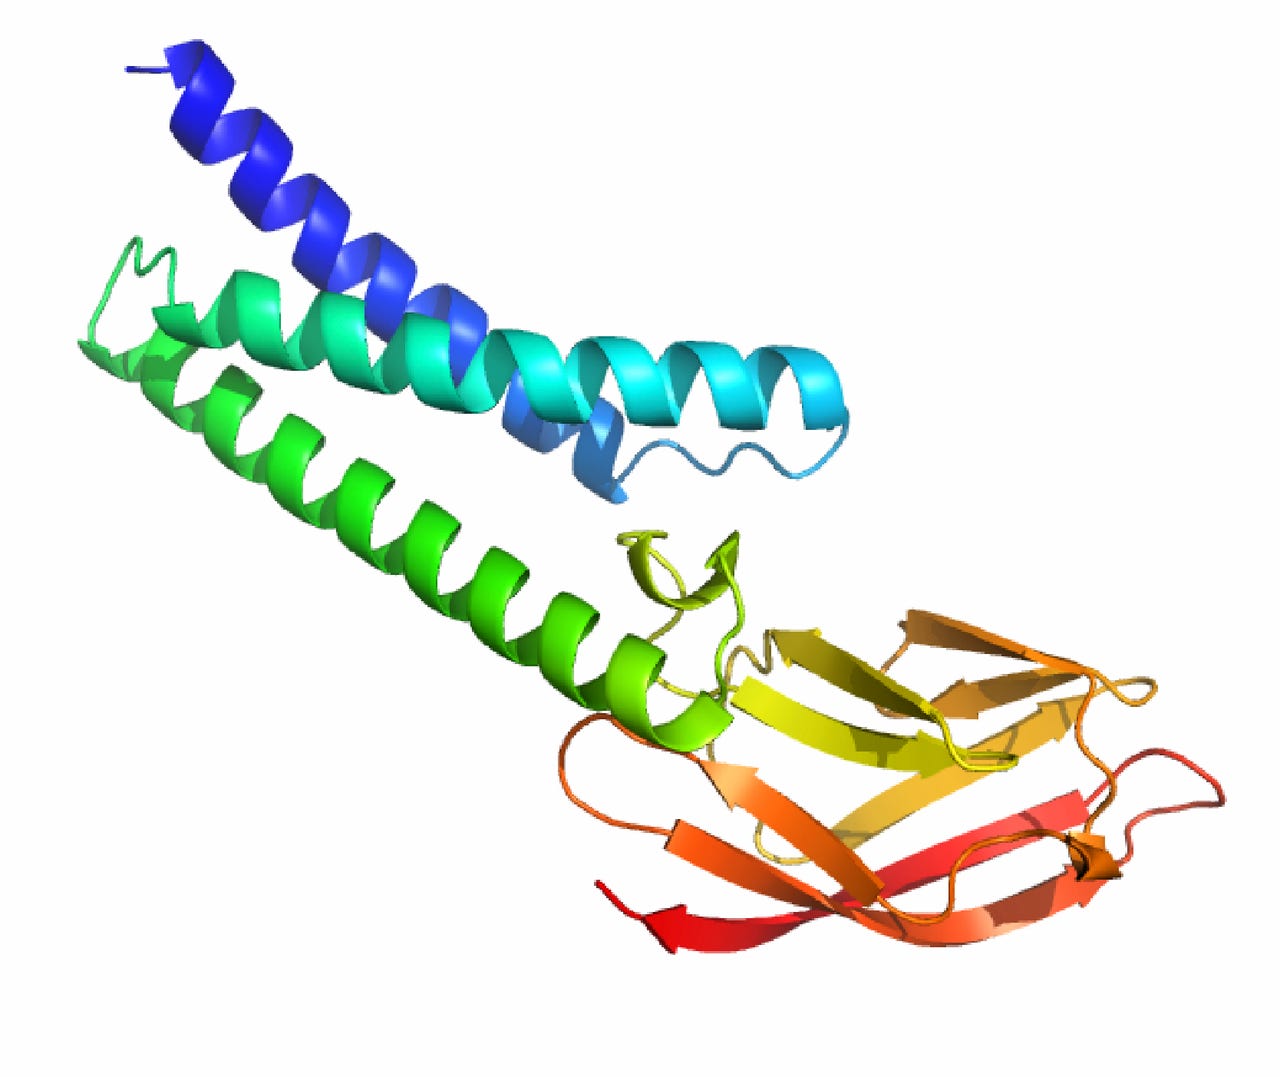 deepmind-coronavirus-protein-image.png